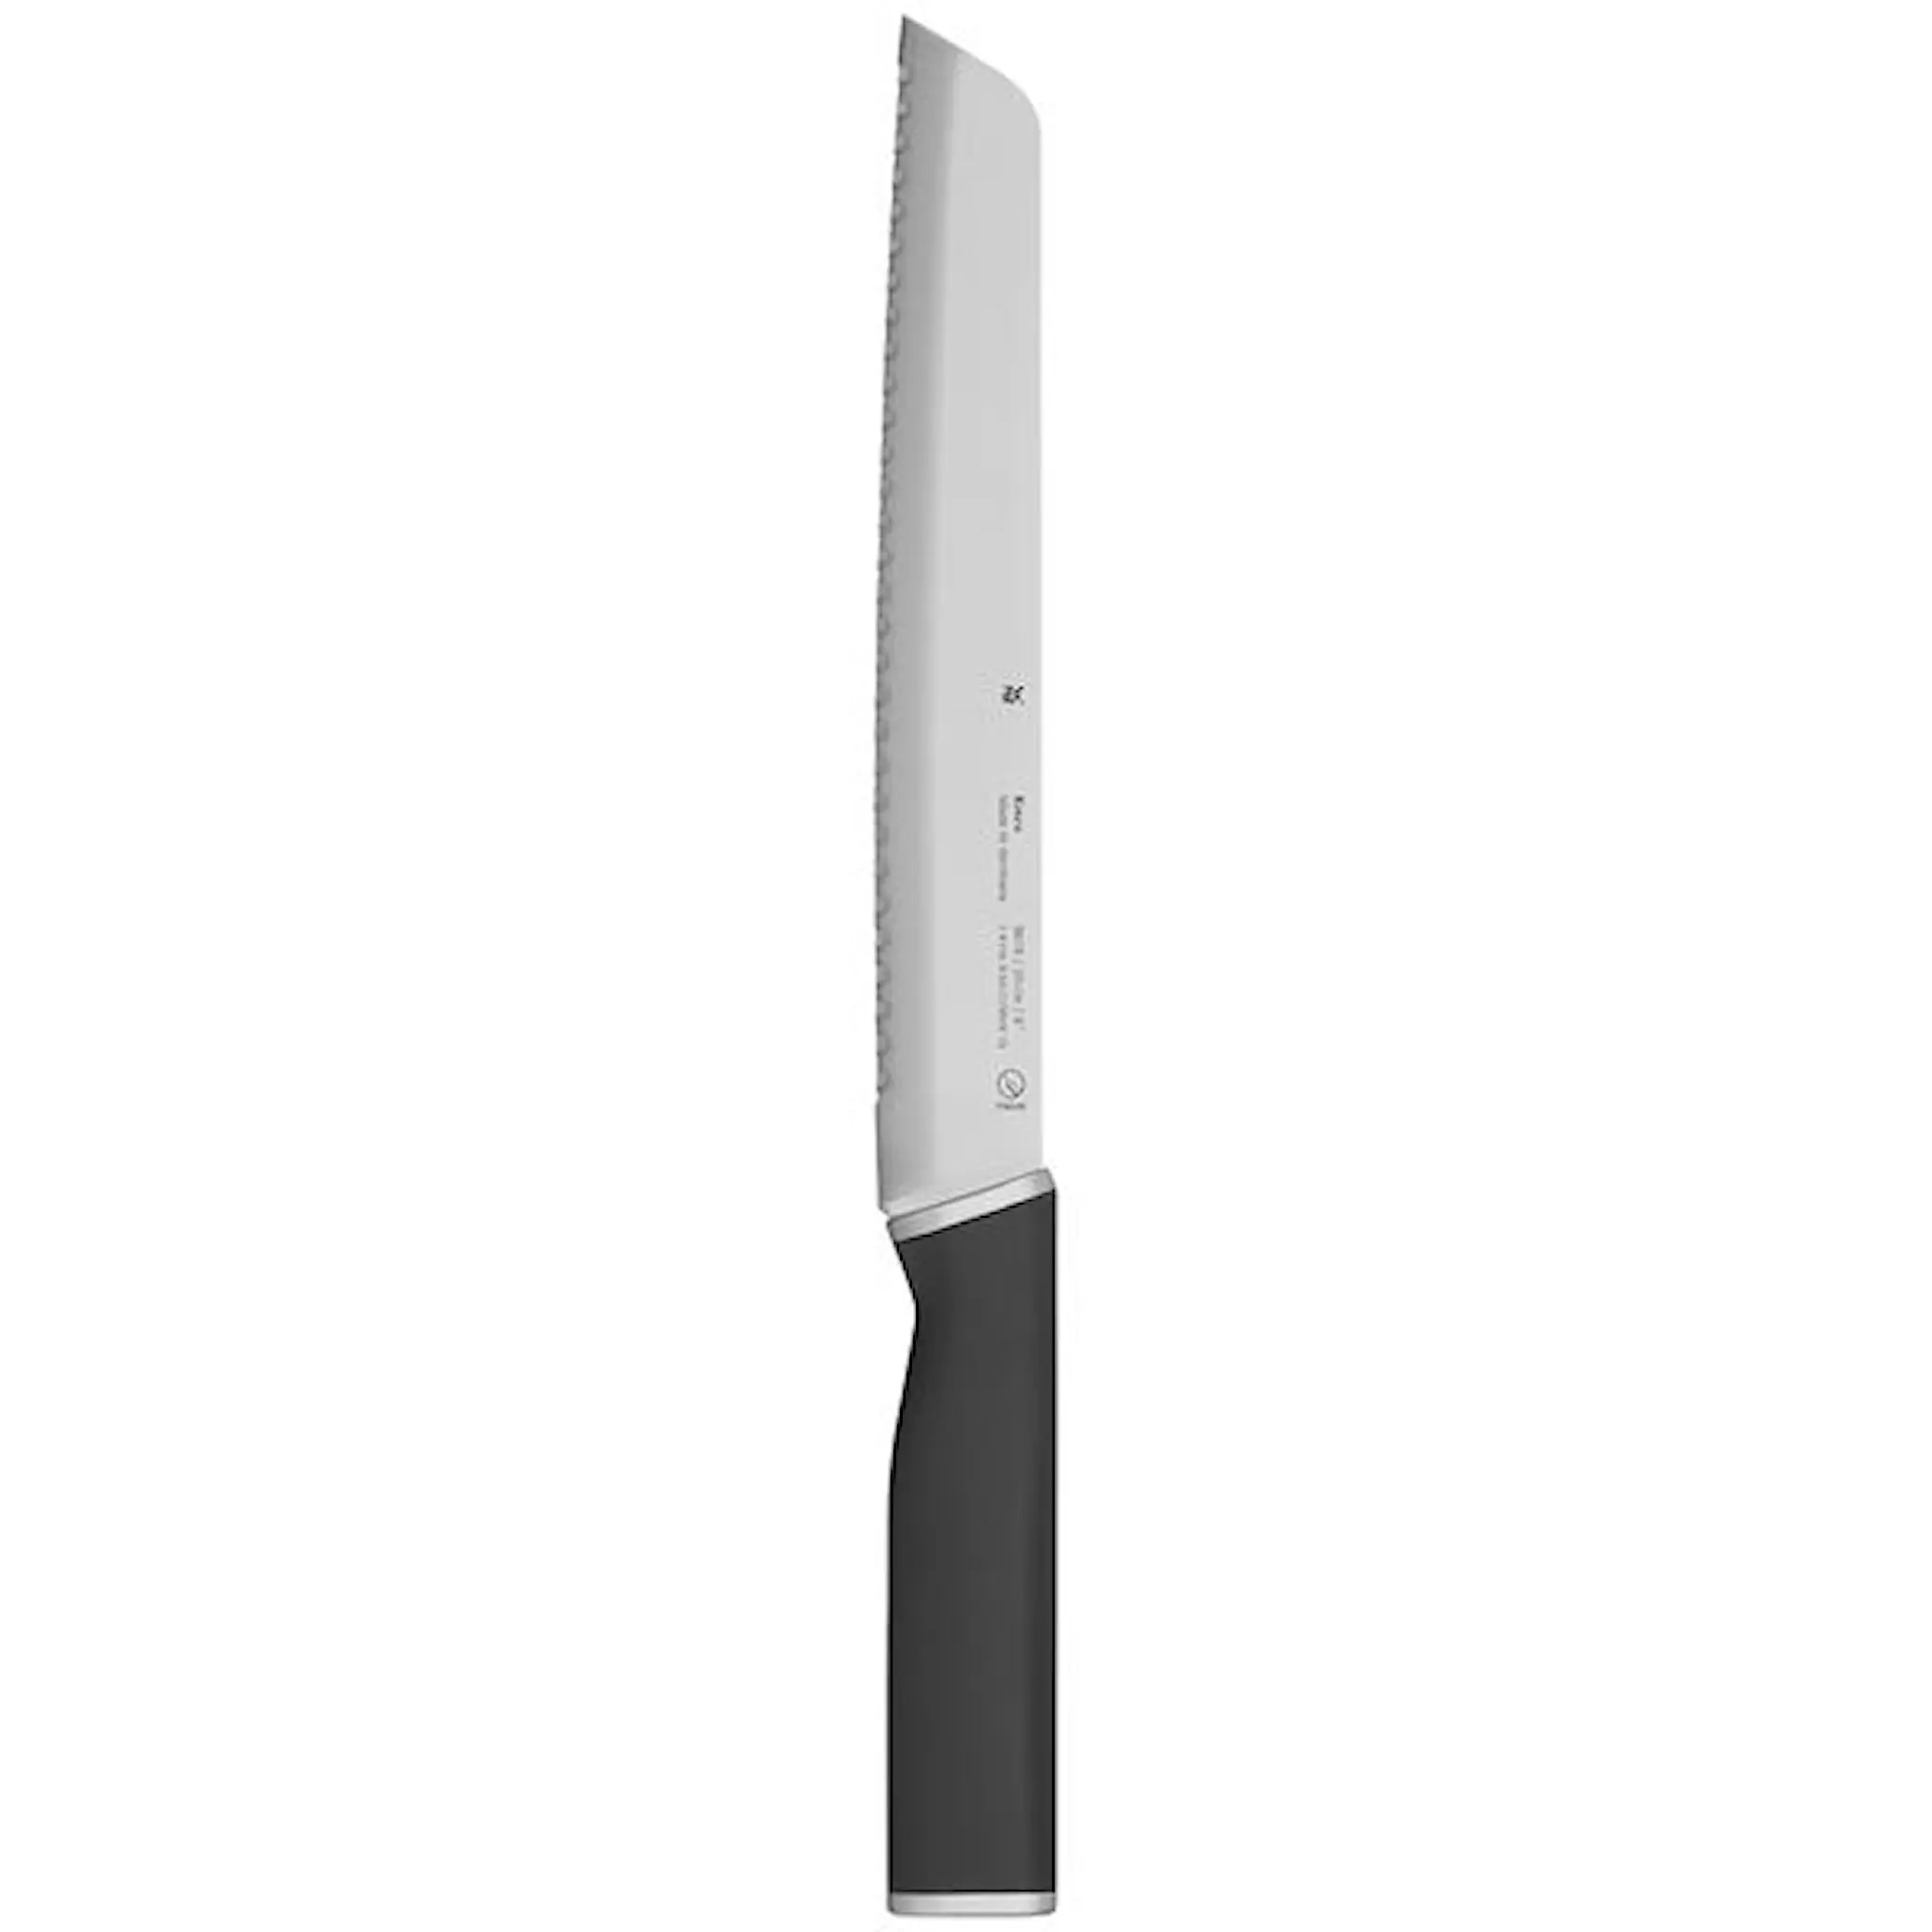 WMF Kineo brødkniv 20 cm